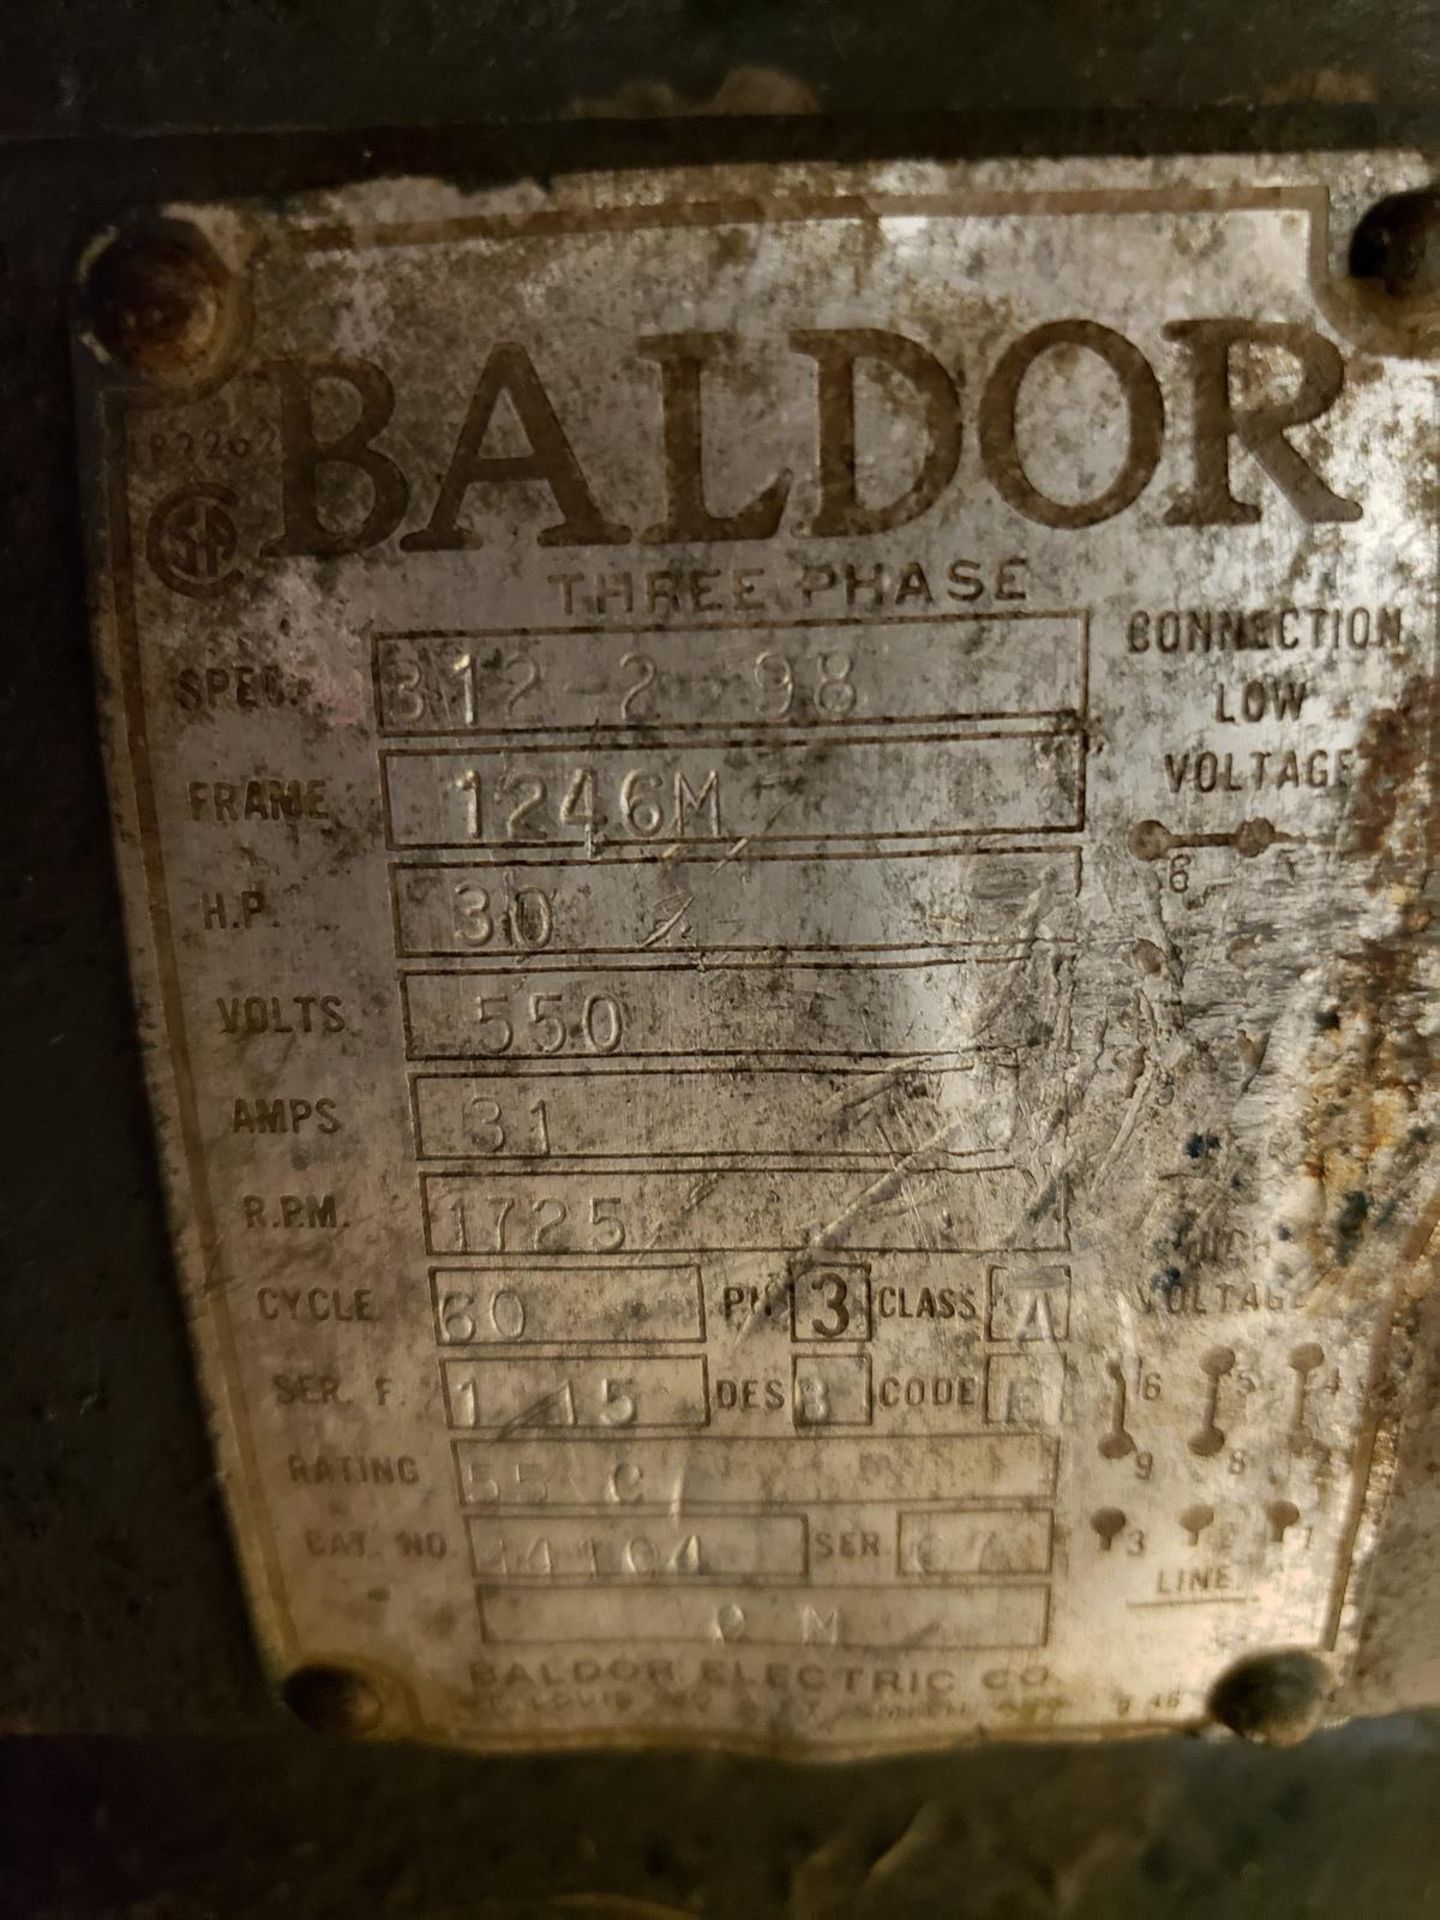 Baldor Electric Motor, 30 HP, Frame 1246M Rig Fee: $50 - Image 2 of 2